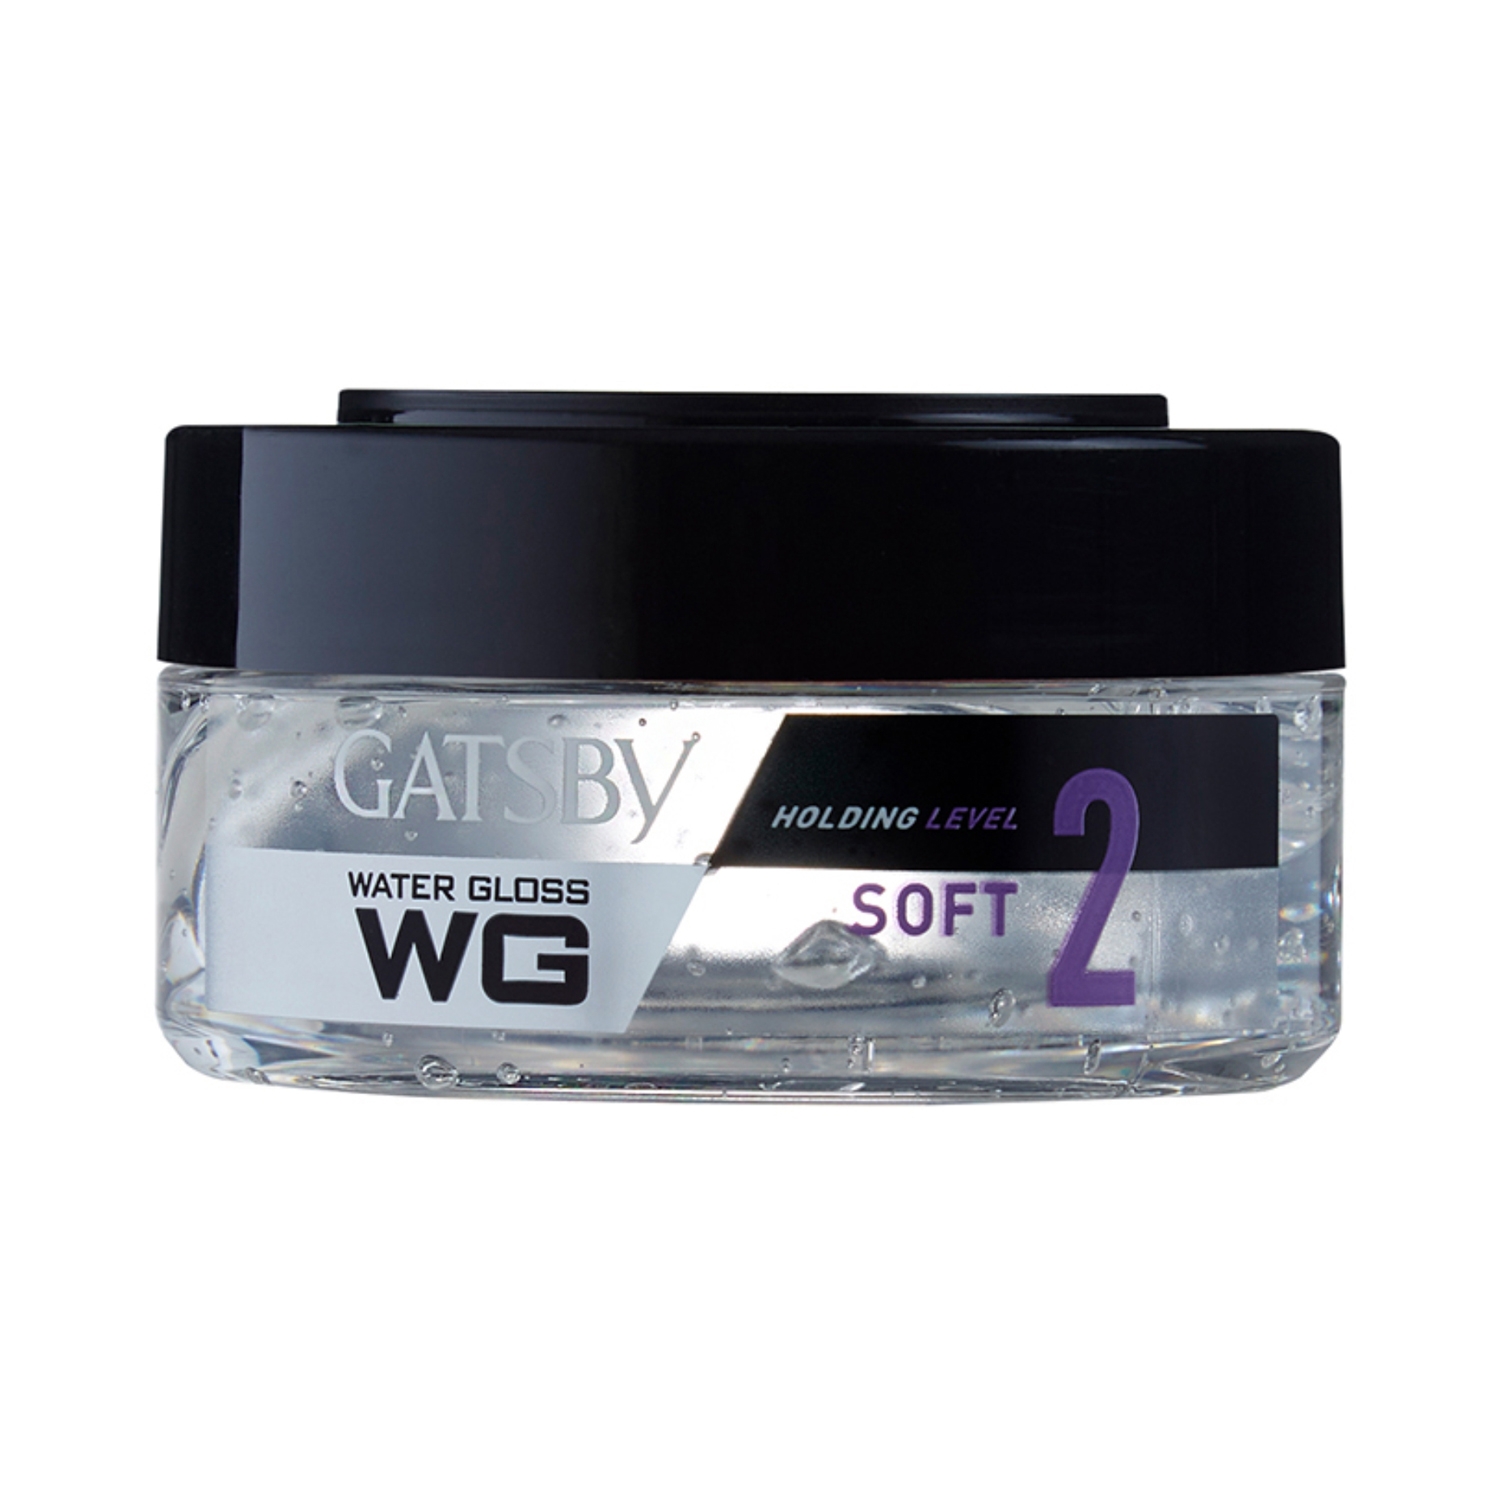 Gatsby | Gatsby Water Gloss Soft Gel (75g)